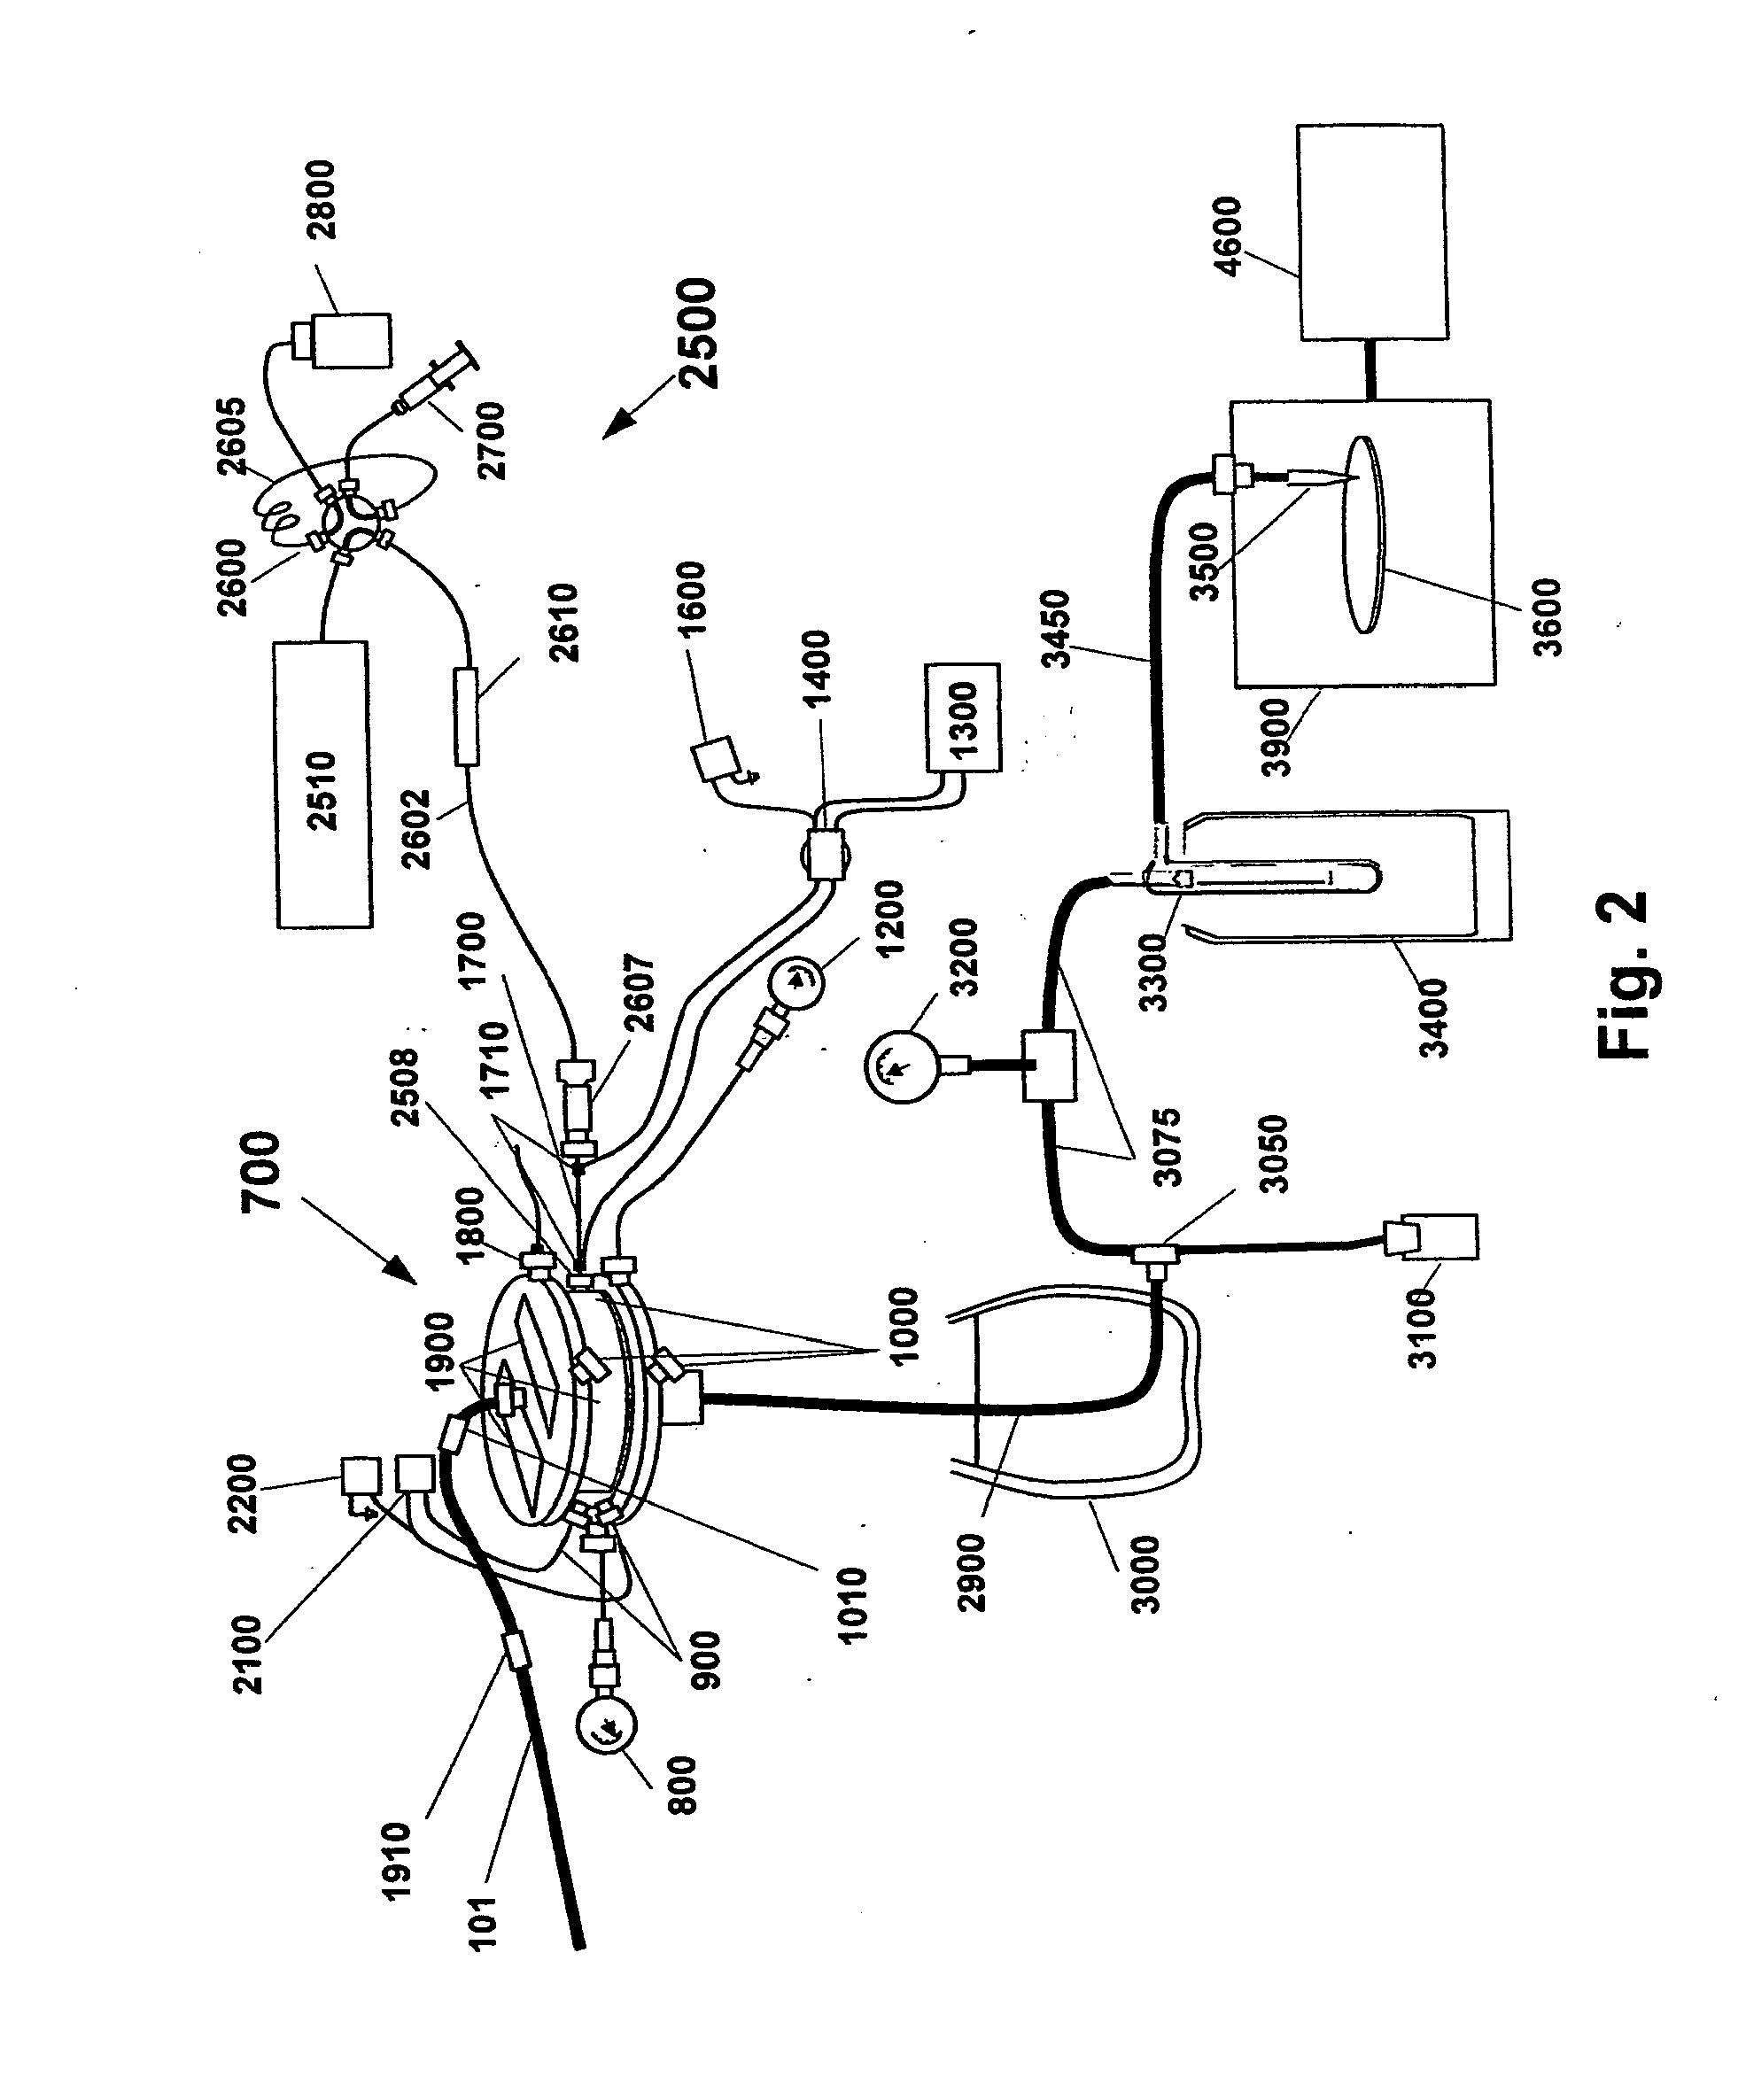 Method and apparatus for desolvating flowing liquid